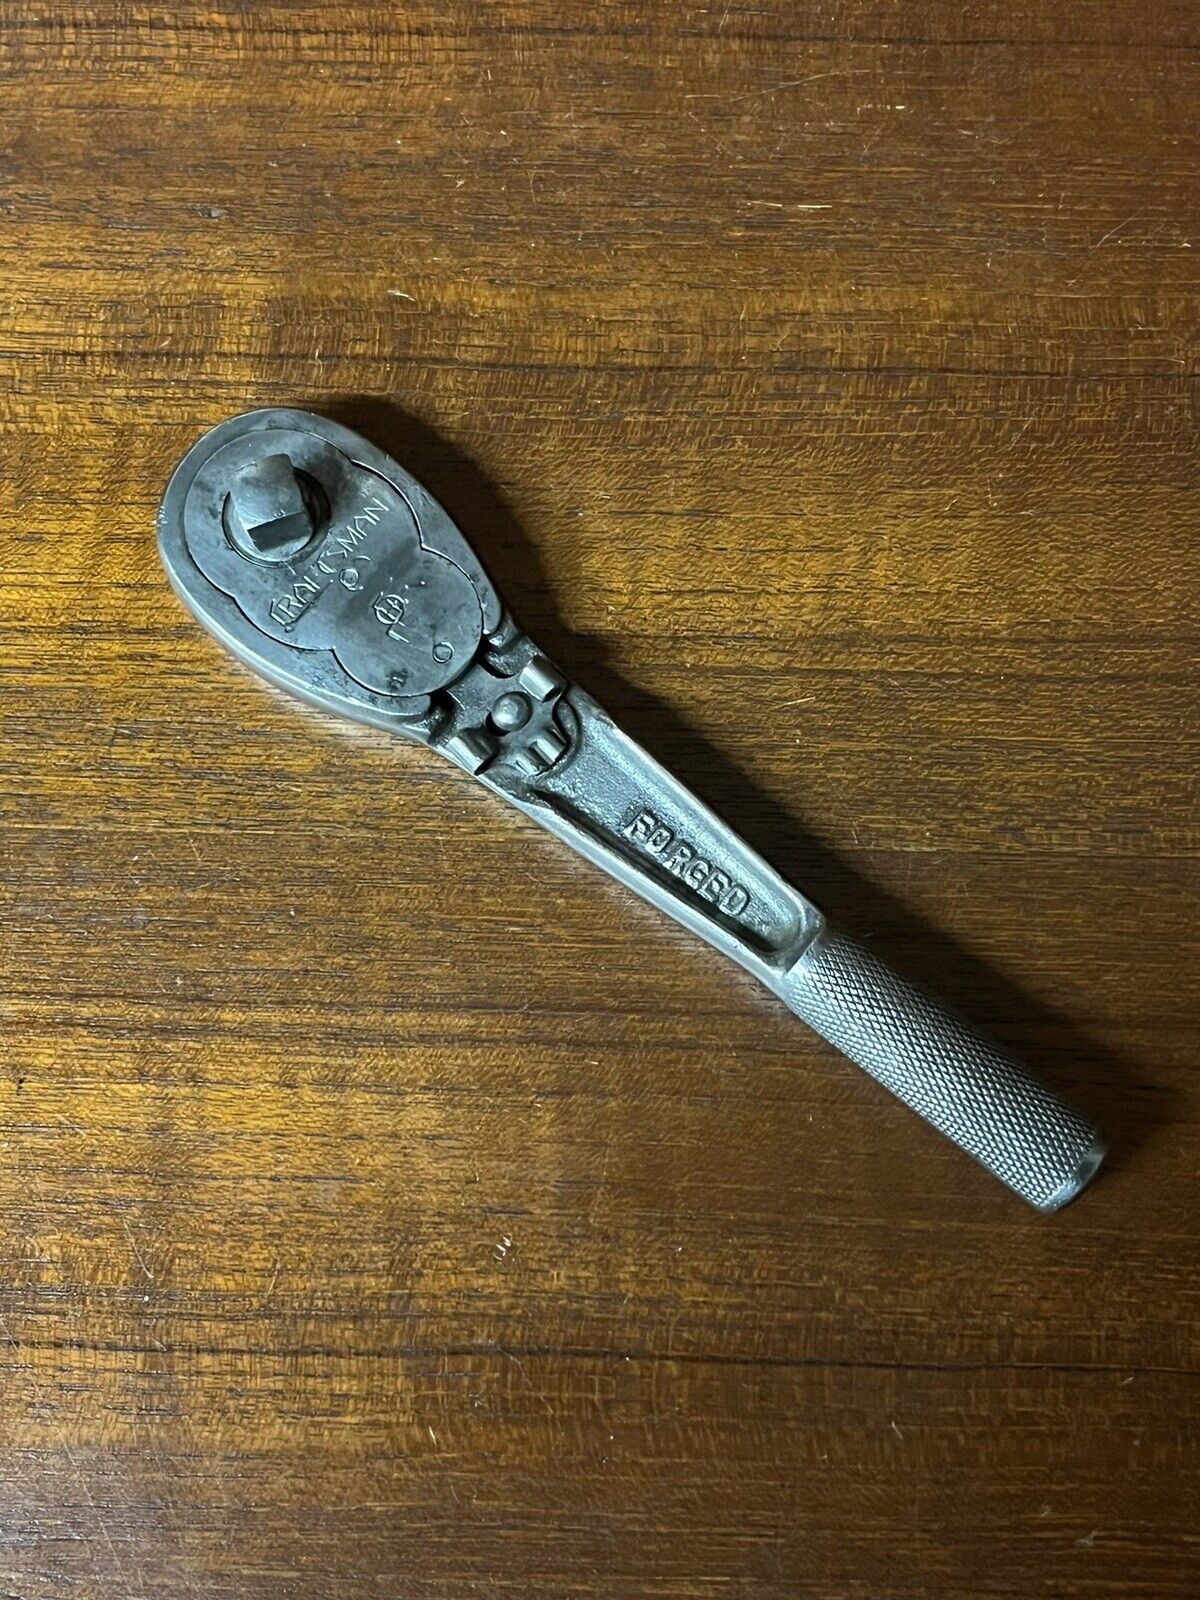 Vintage Craftsman 3/8” Ratchet Wrench “Circle H” MECHANIC 1930s - 1940s USA